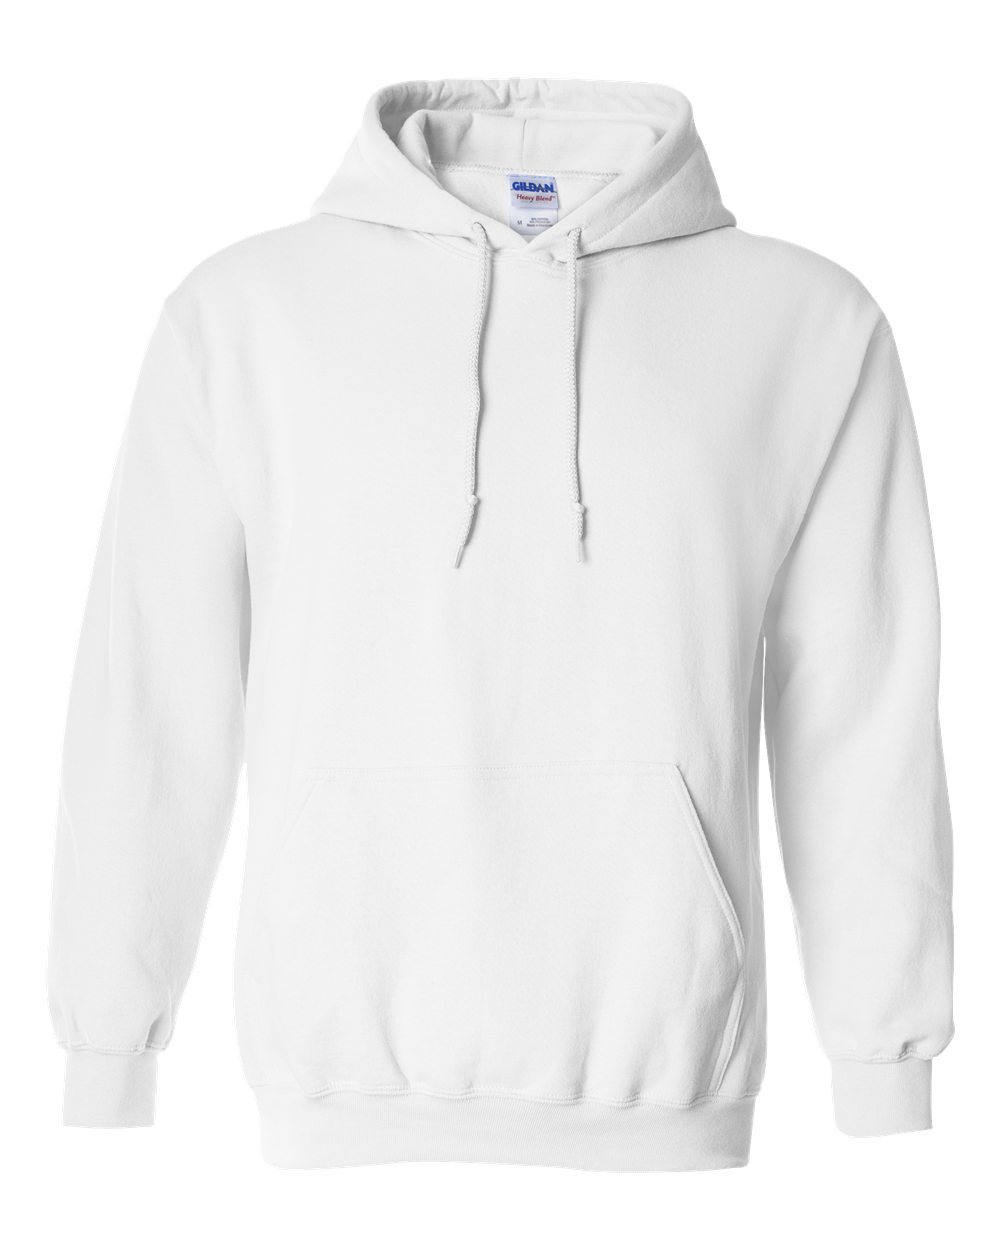 Gildan Heavy Blend Hooded Sweatshirt XL BRAND NEW 